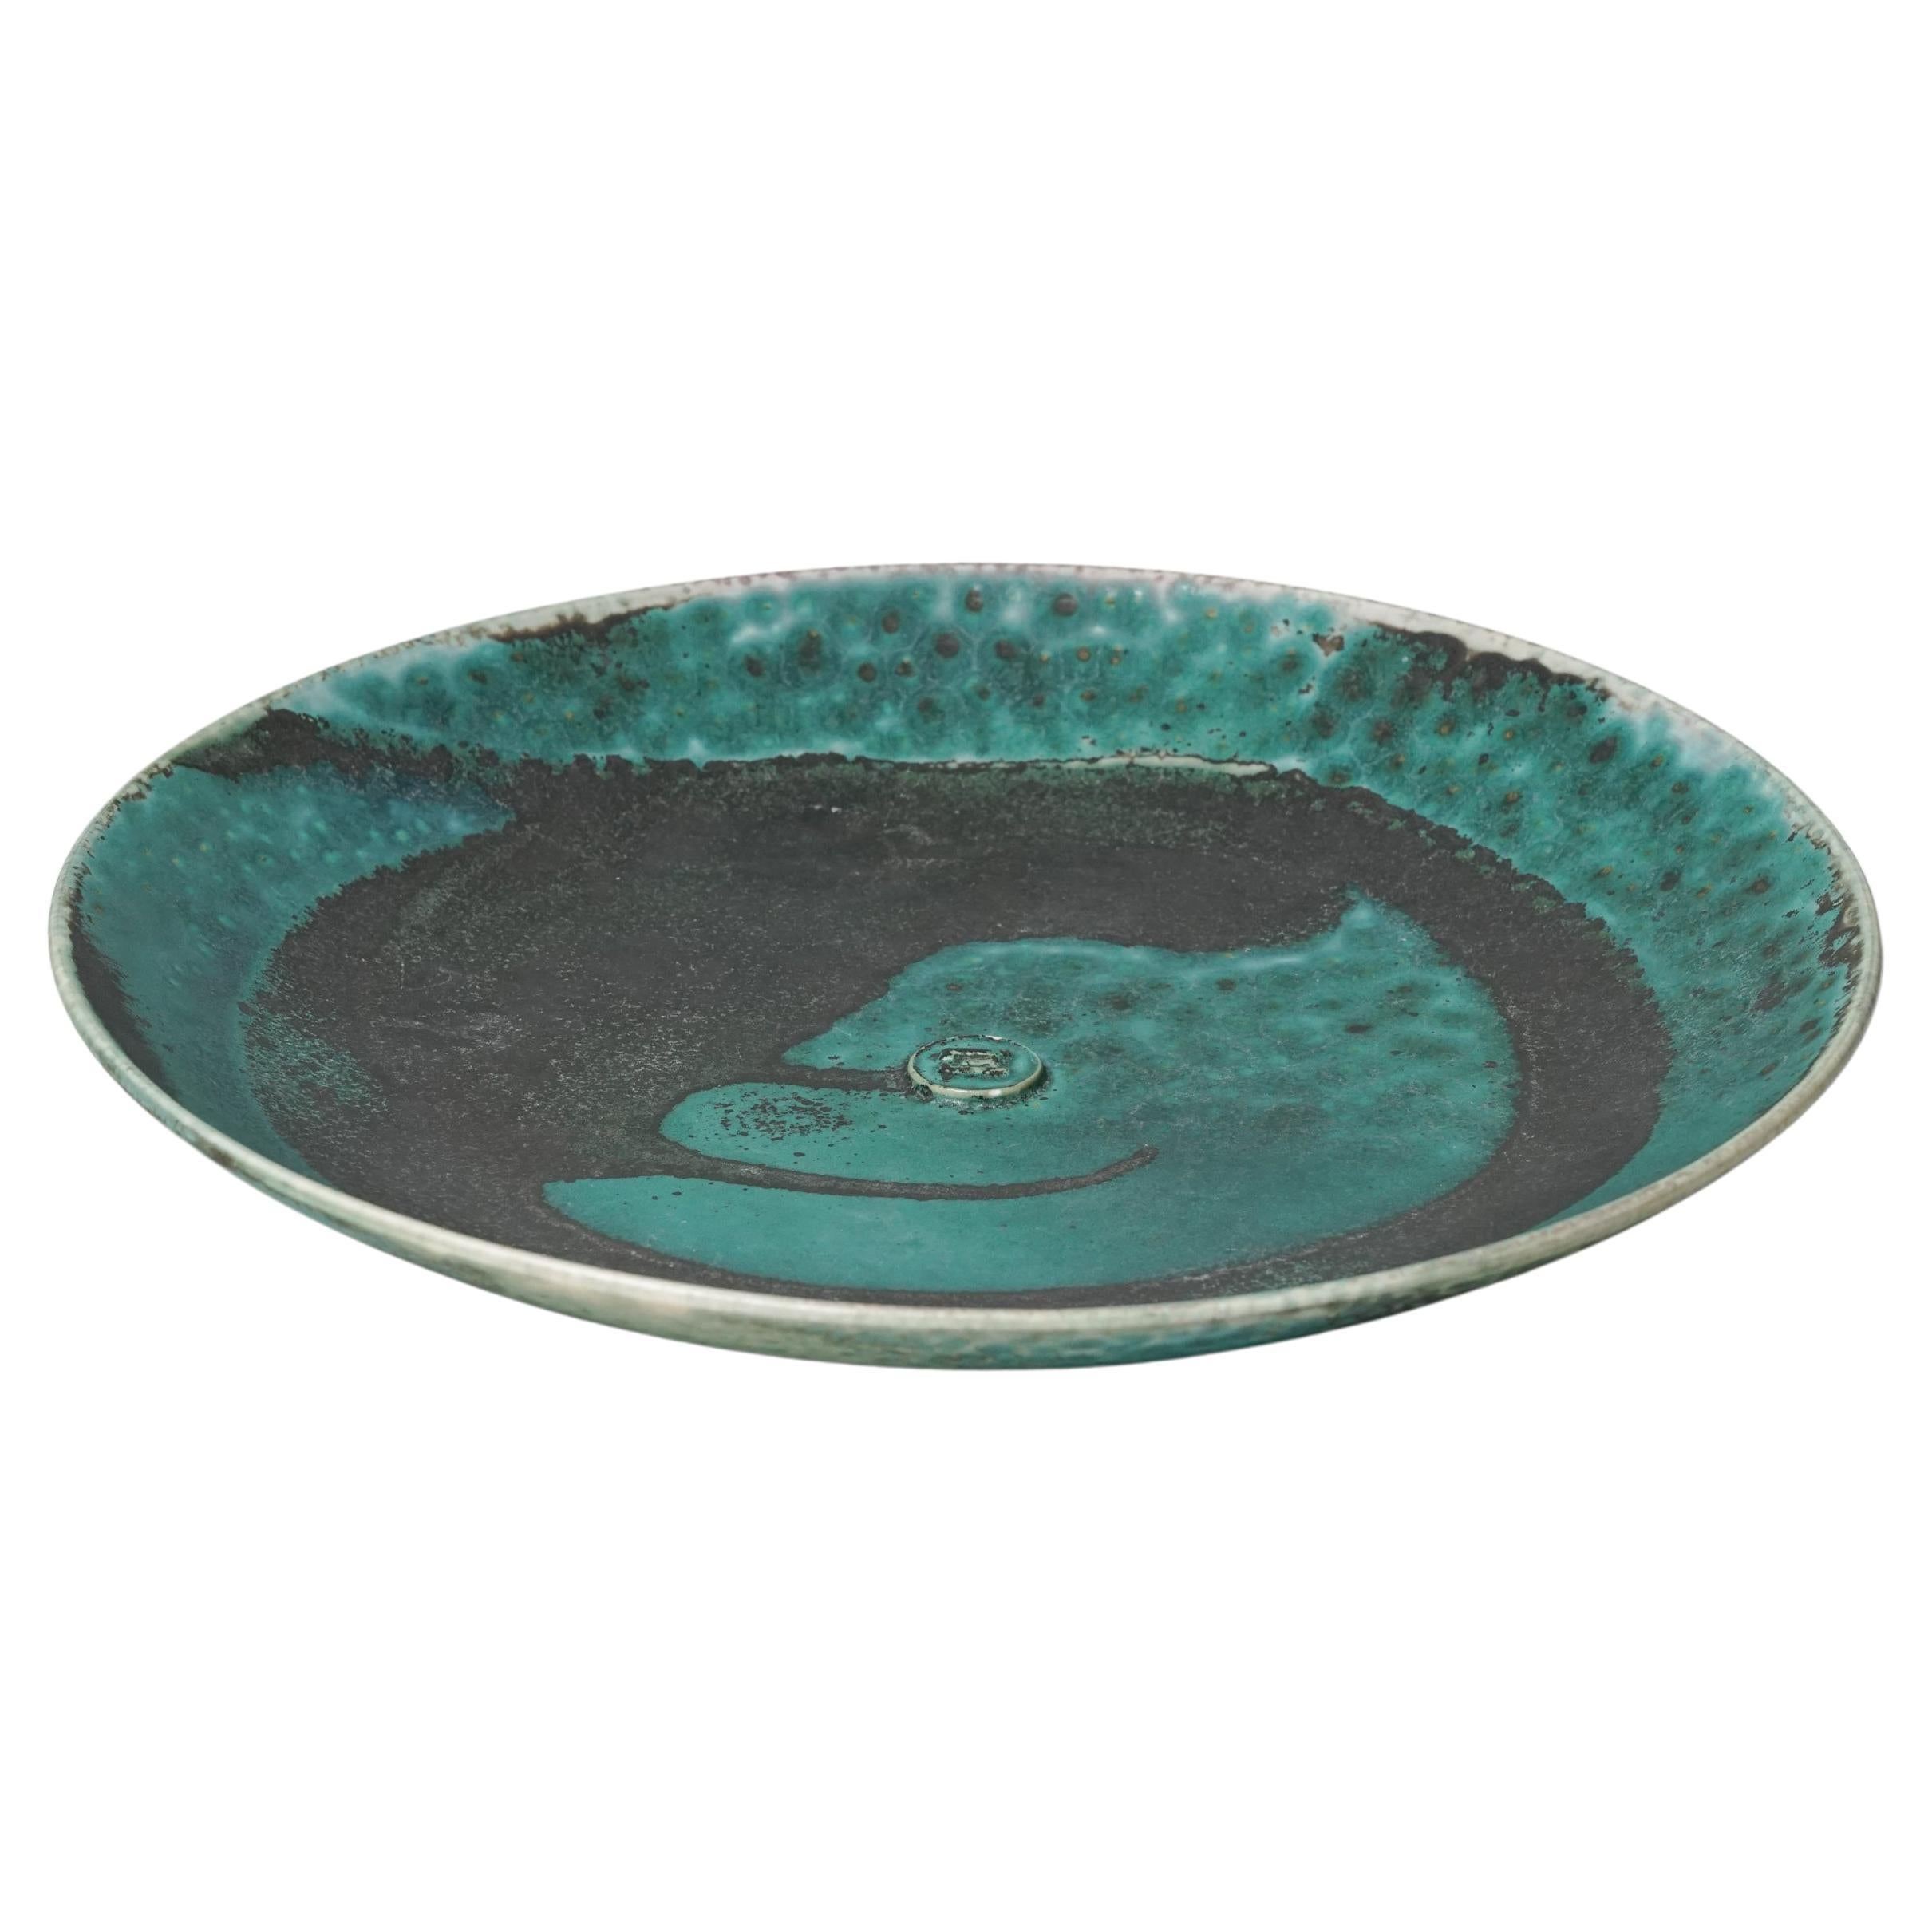 Ceramic Plate by Annikki Hovisaari for Arabia, 1950s